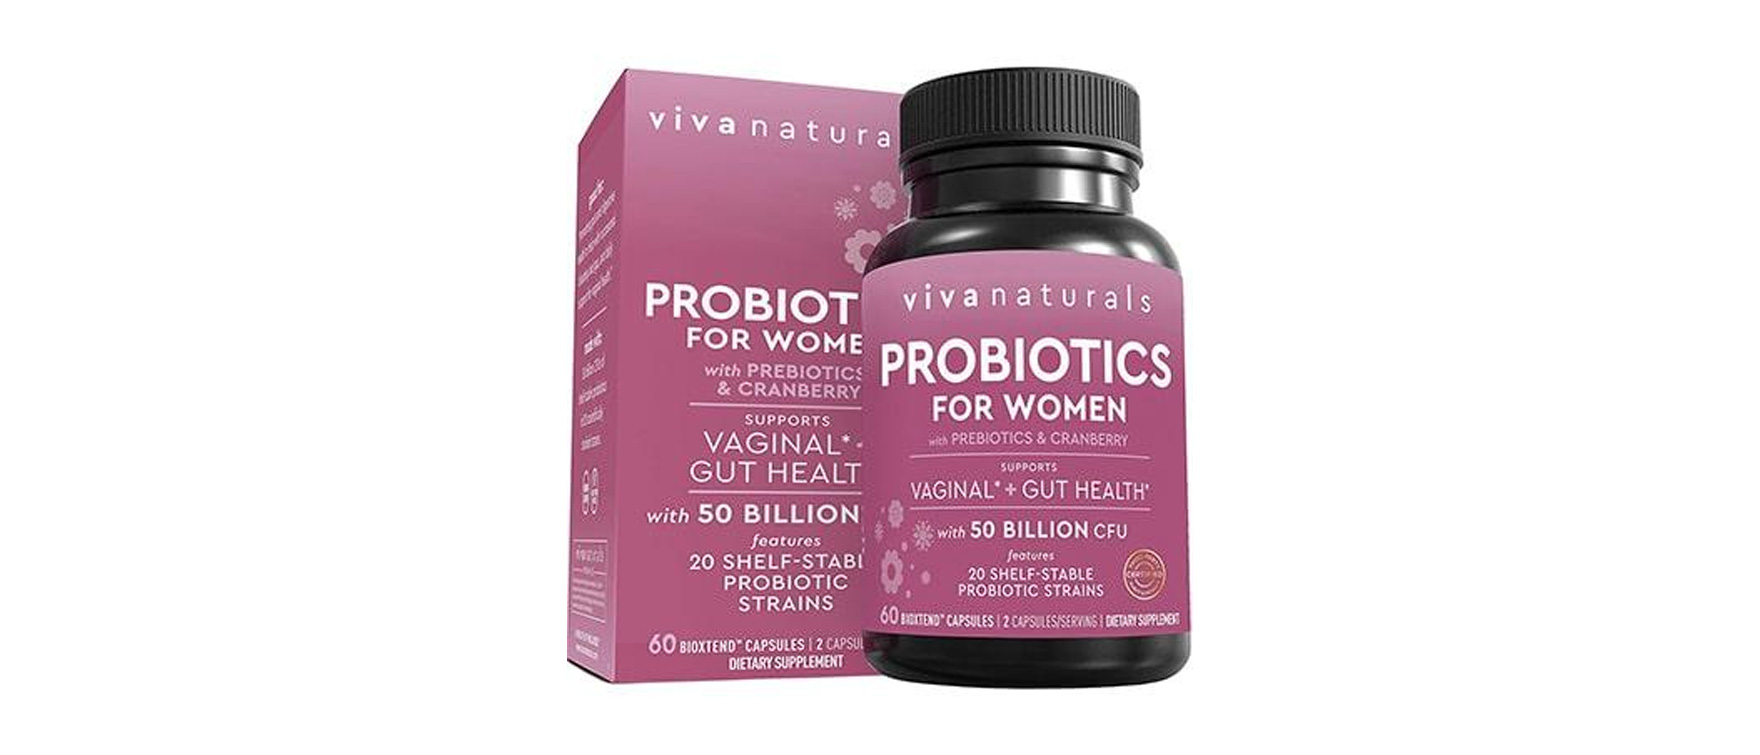 3. Viva Naturals Probiotics for Women 